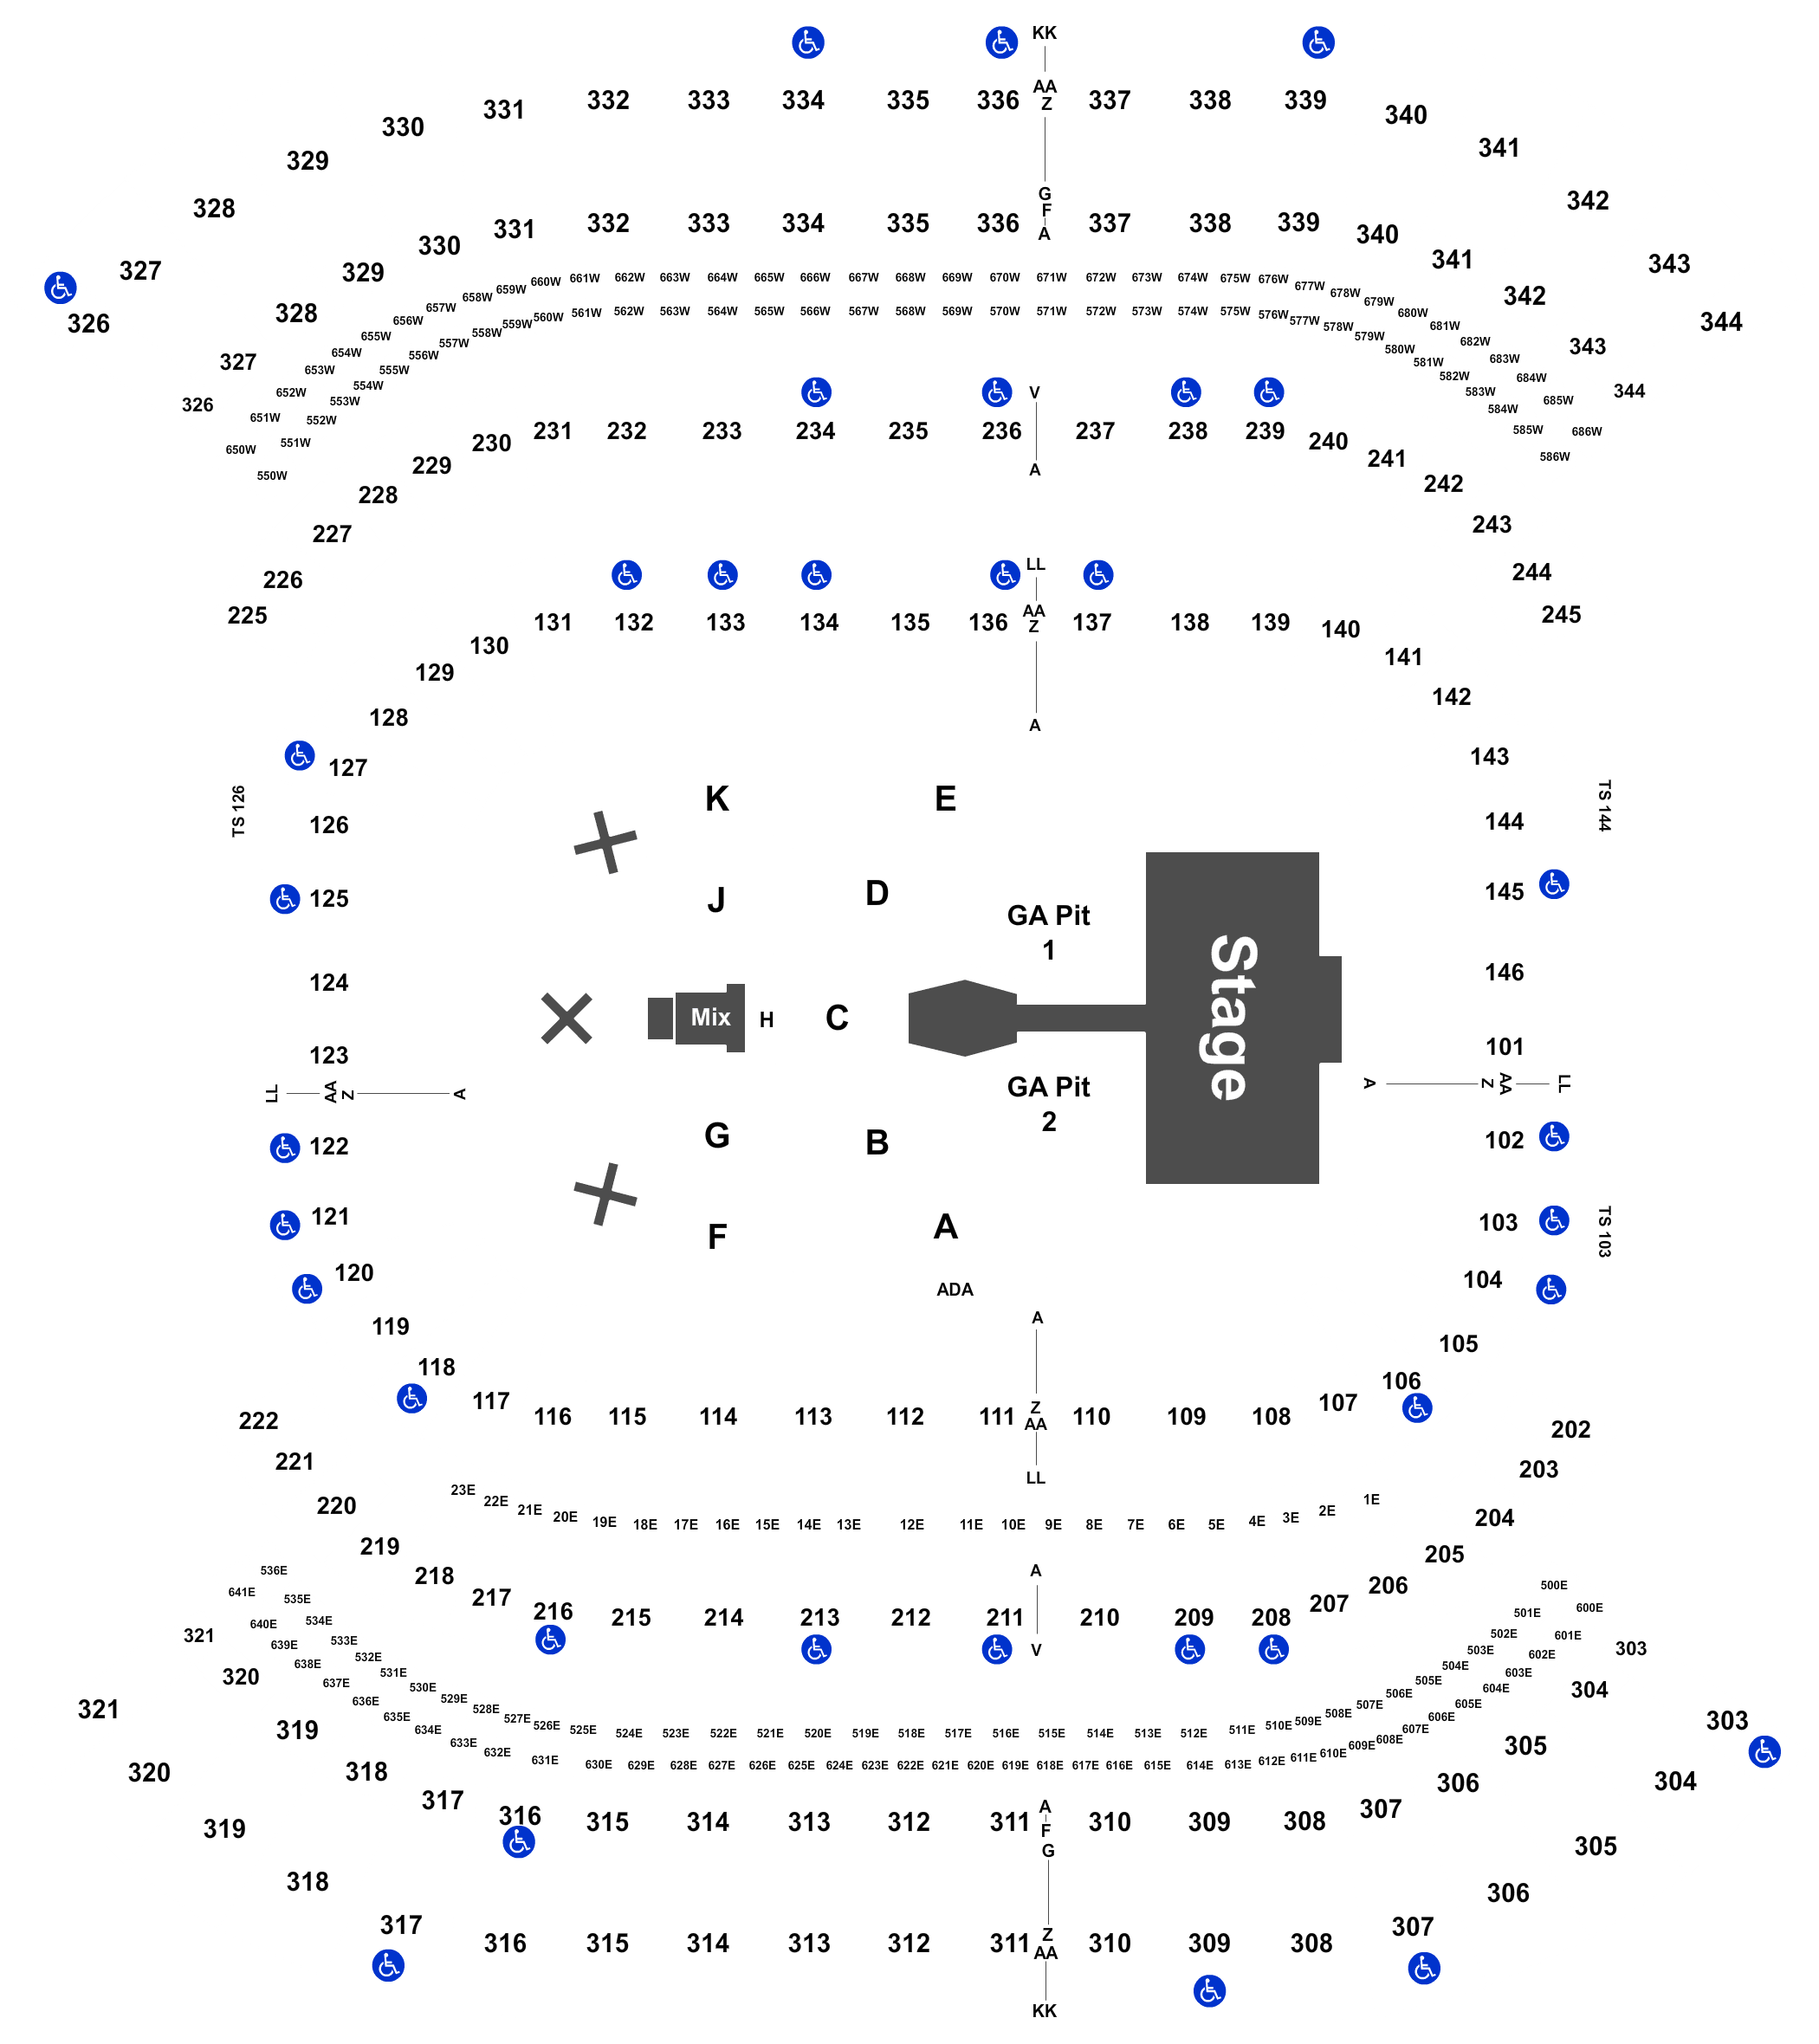 Nissan Stadium Seating Charts 